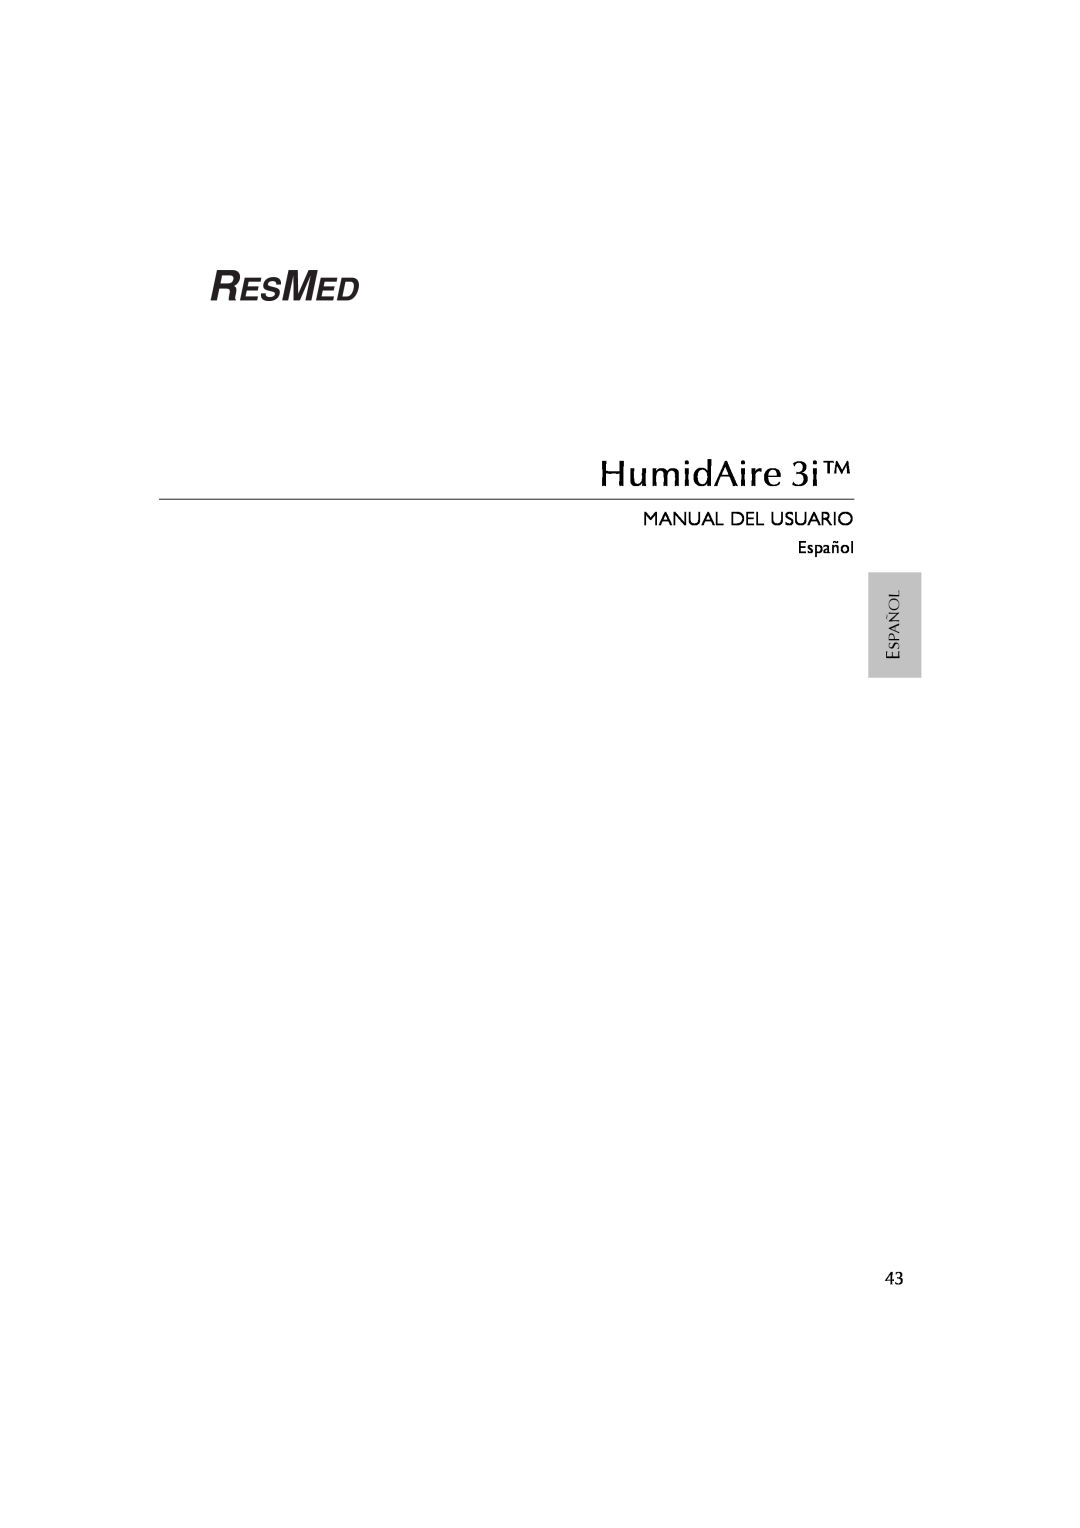 ResMed 3I user manual Manual Del Usuario, HumidAire, Español 